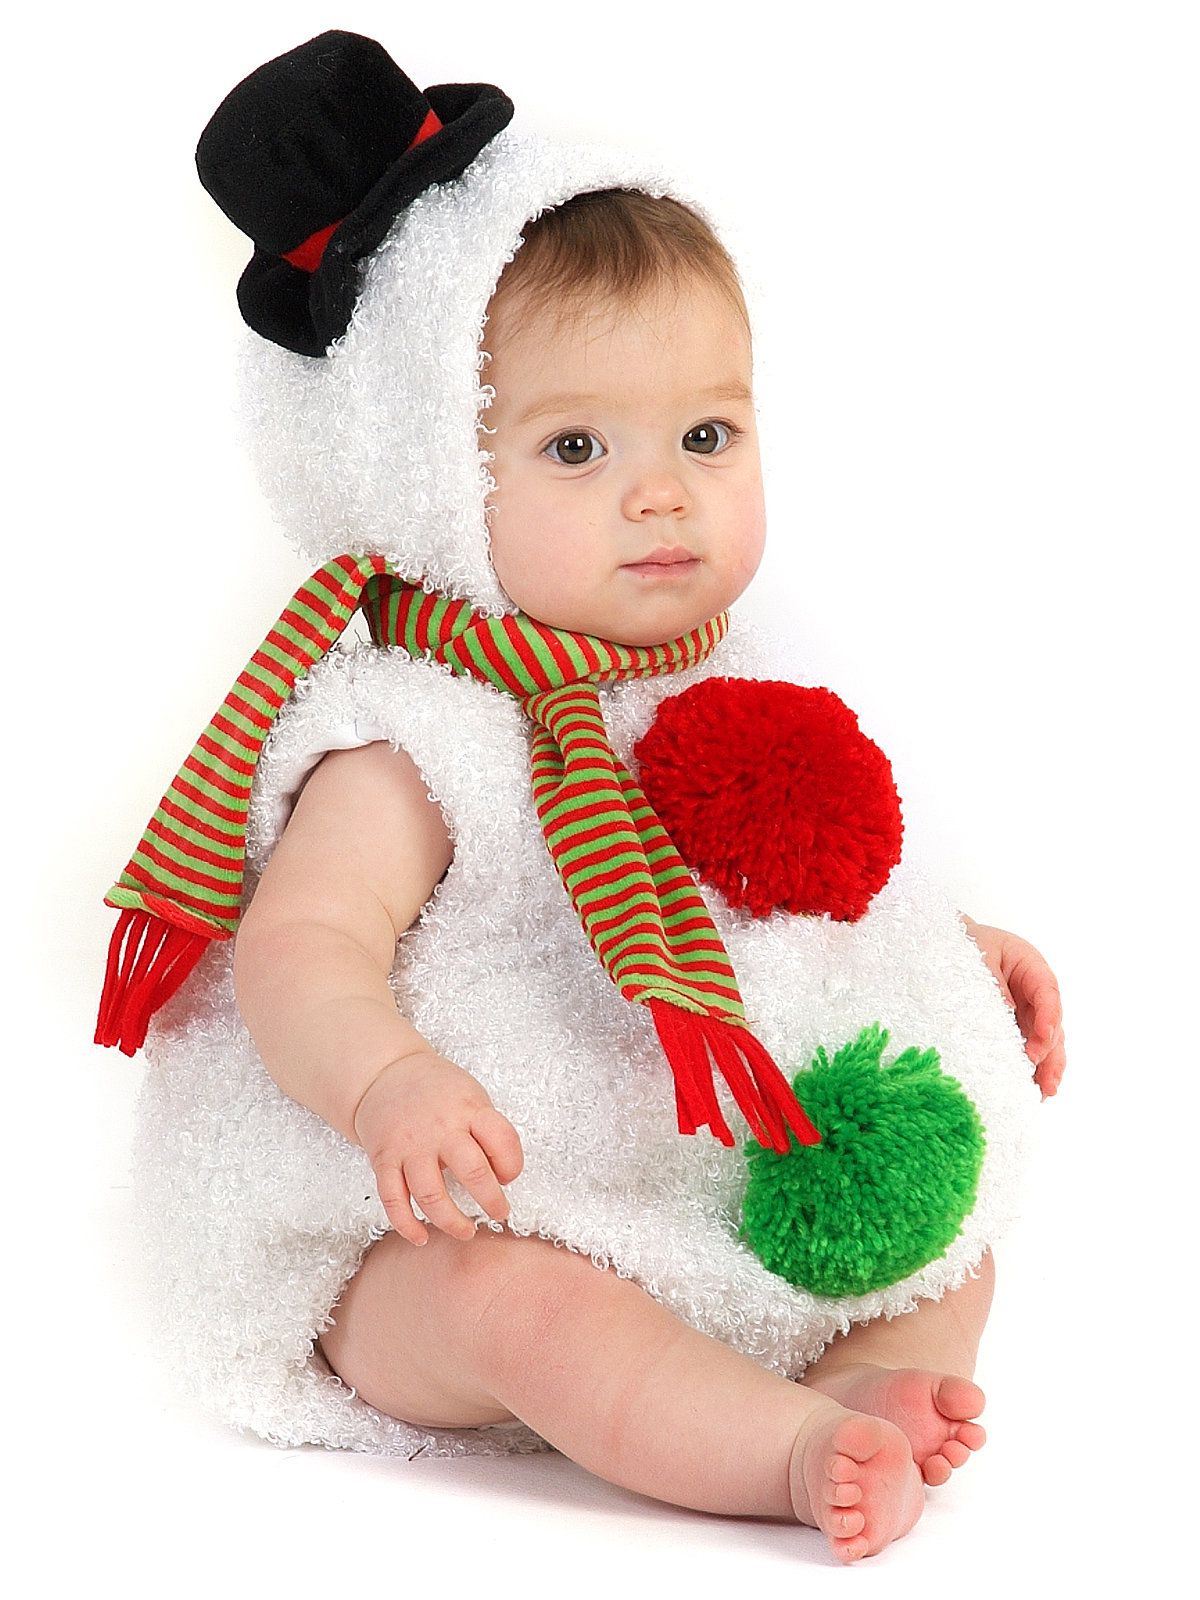 Snowman Baby Costume - costumes.com